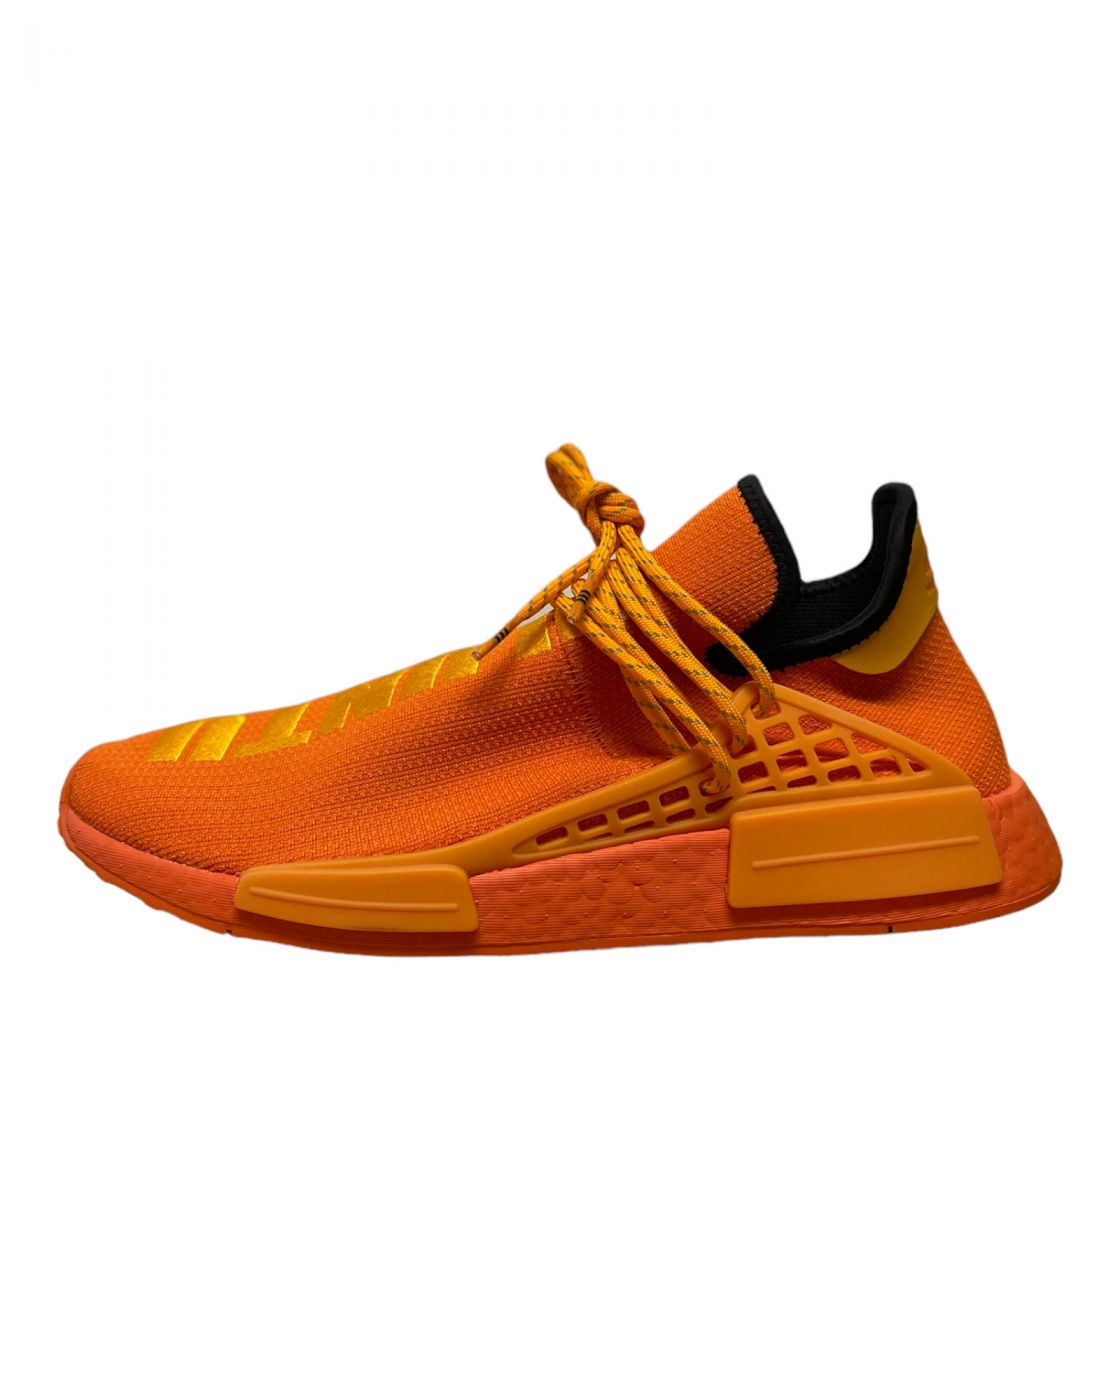 Adidas original Pharrell x NMD Human Race Orange 11.5 ADIDAS-239322